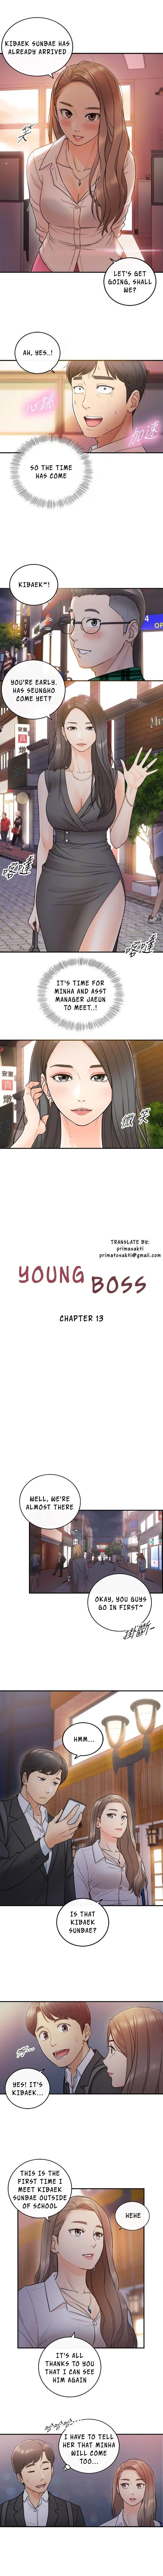 young-boss-001-chap-13-0